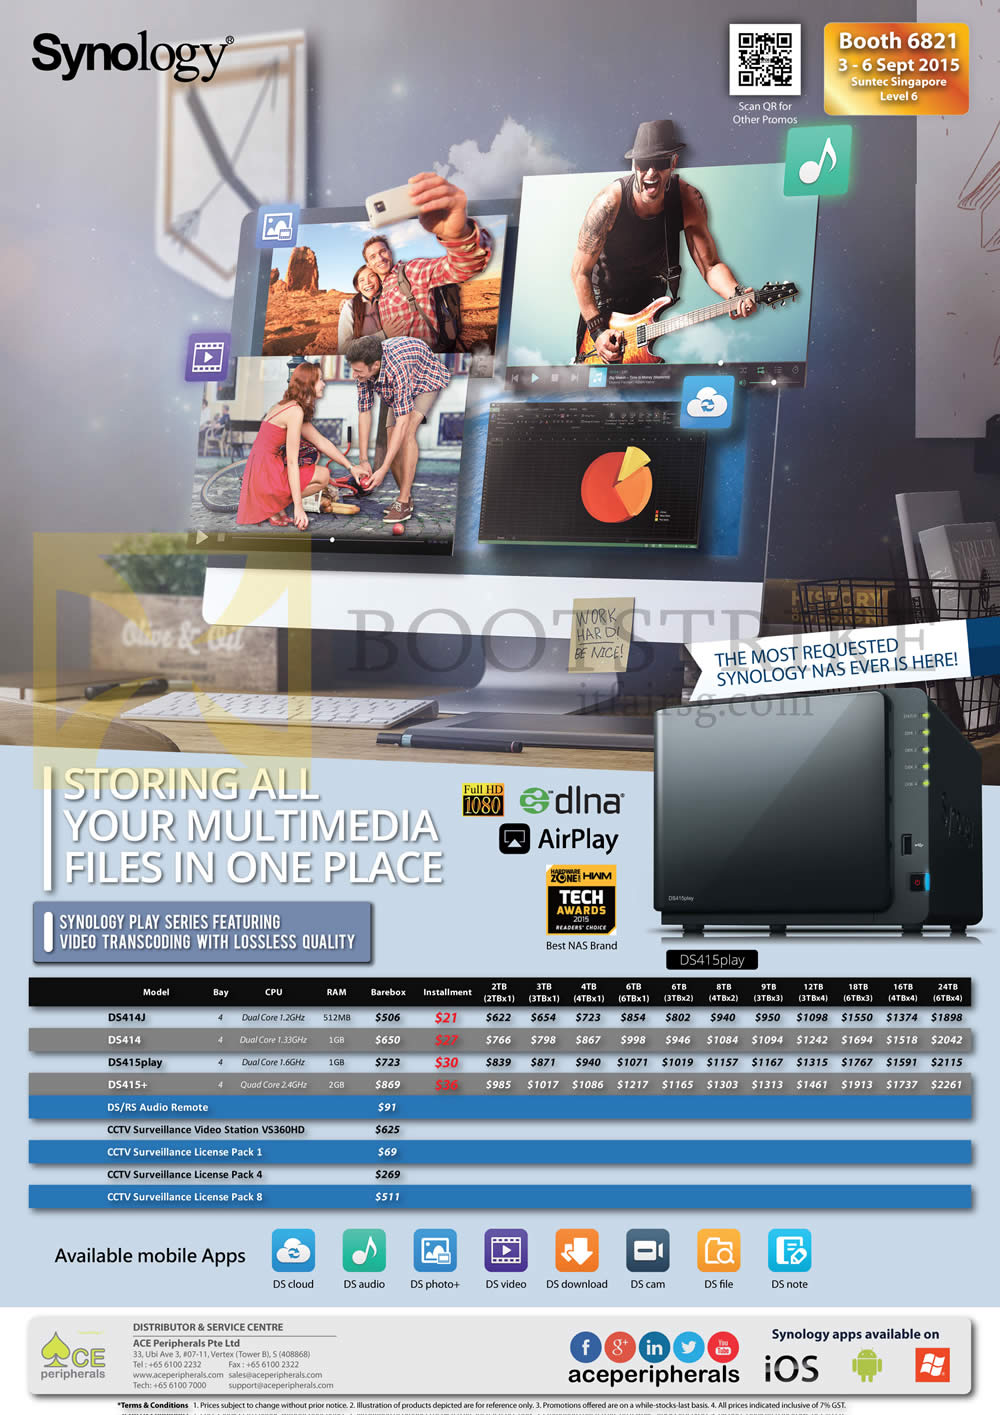 COMEX 2015 price list image brochure of Ace Peripherals Synology NAS DS414J, DS414, DS415play, DS415 Plus, CCTV Surveillance License Pack 1, 4, 8, CCTV Surveillance Video Station VS360HD